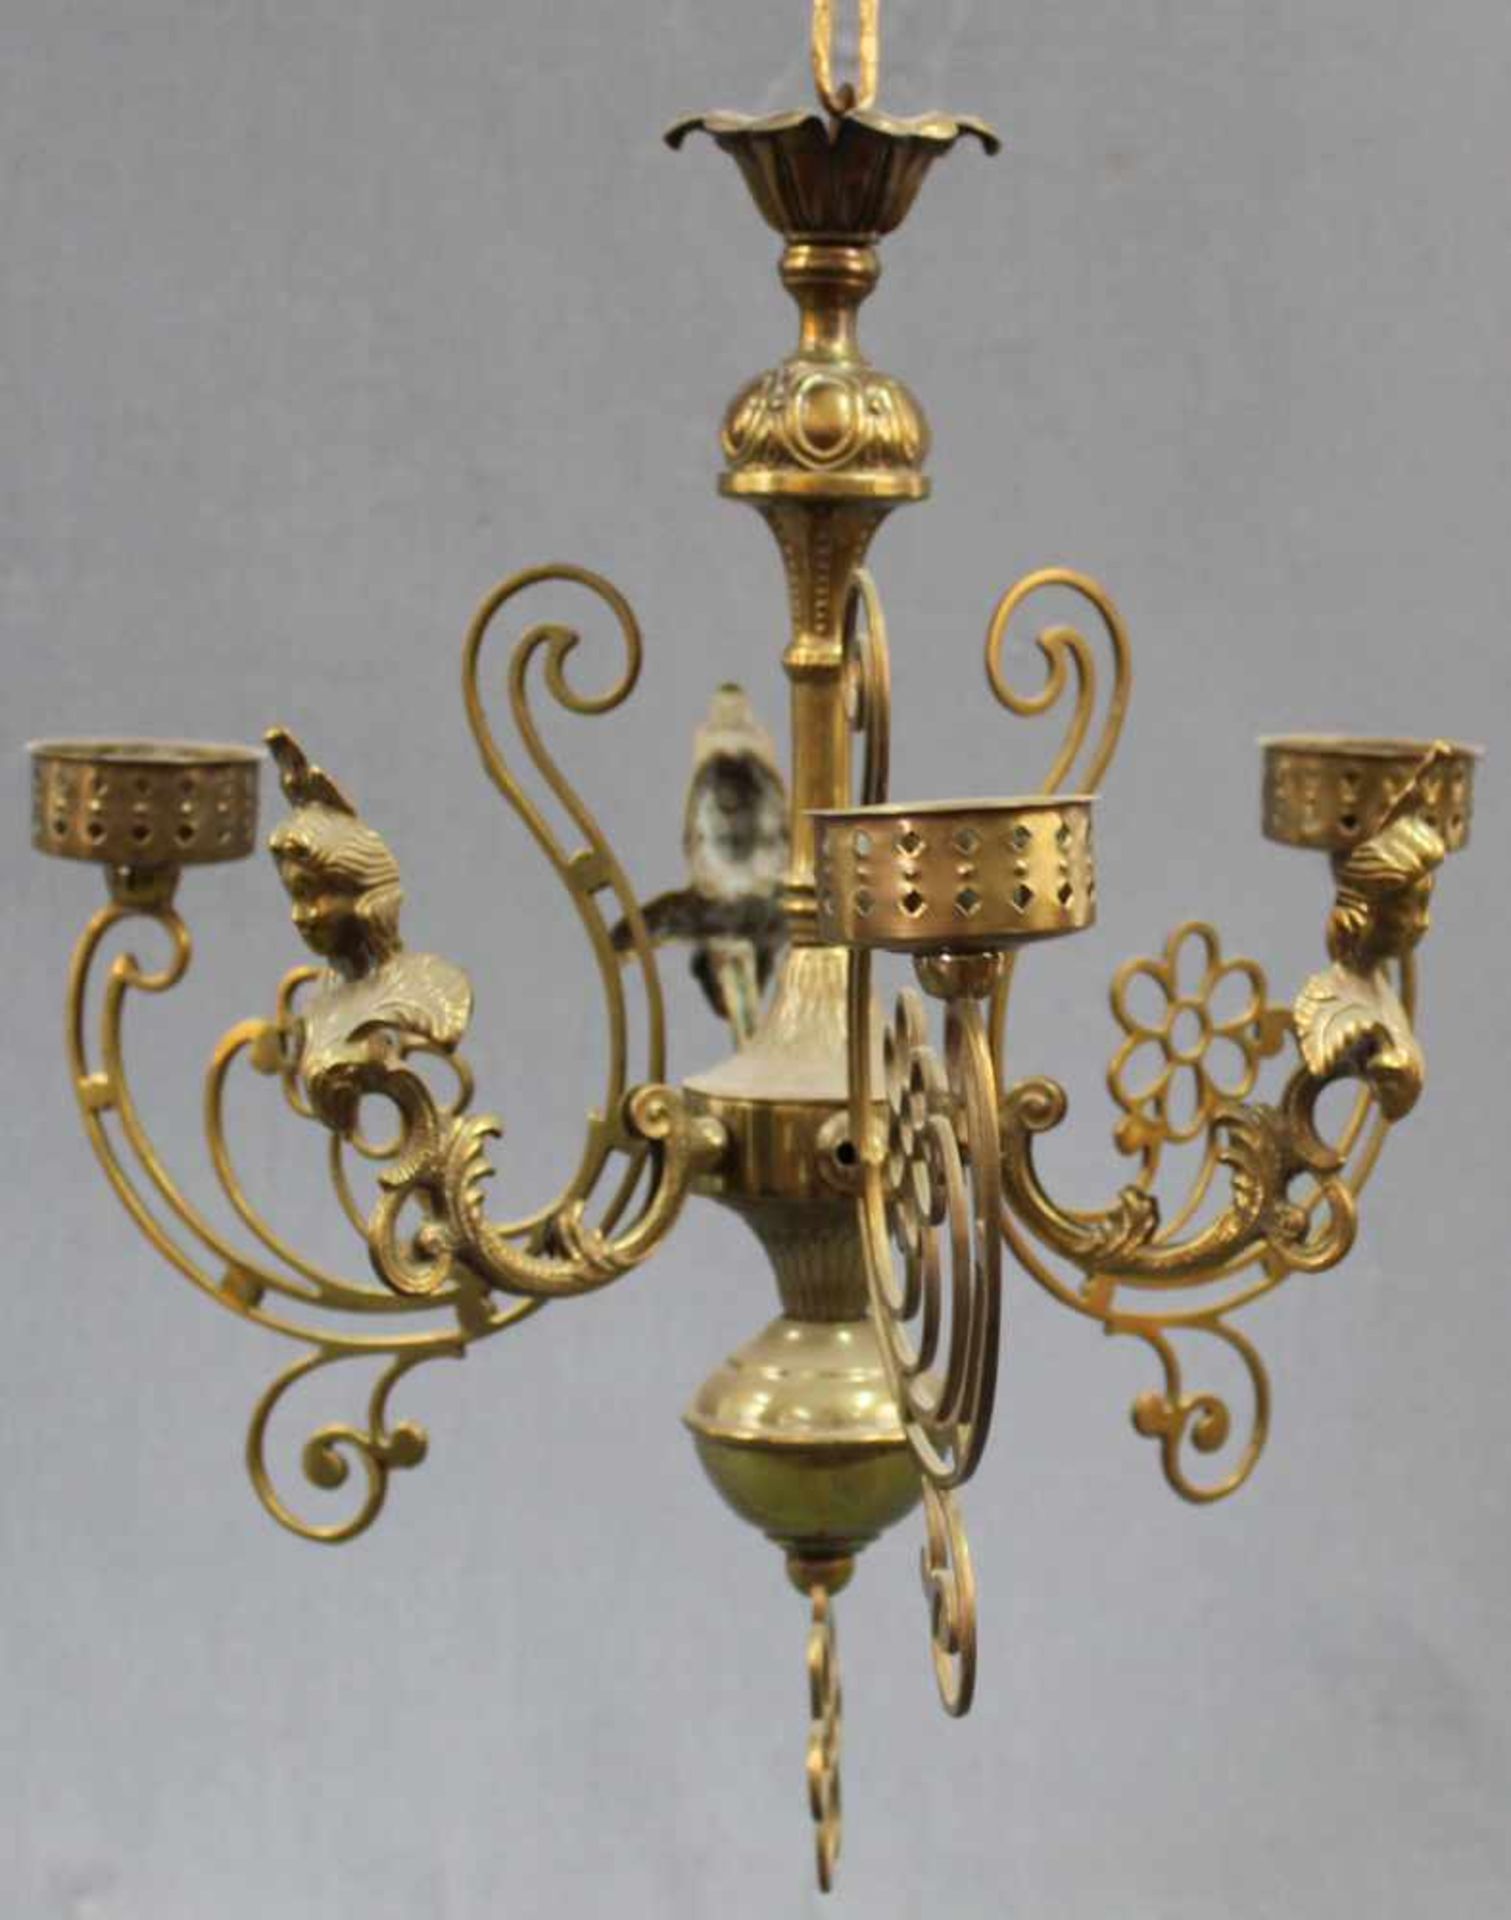 Deckenleuchter Messing klein. 43 cm x 40 cm. Ceiling lamp brass small. - Image 2 of 6